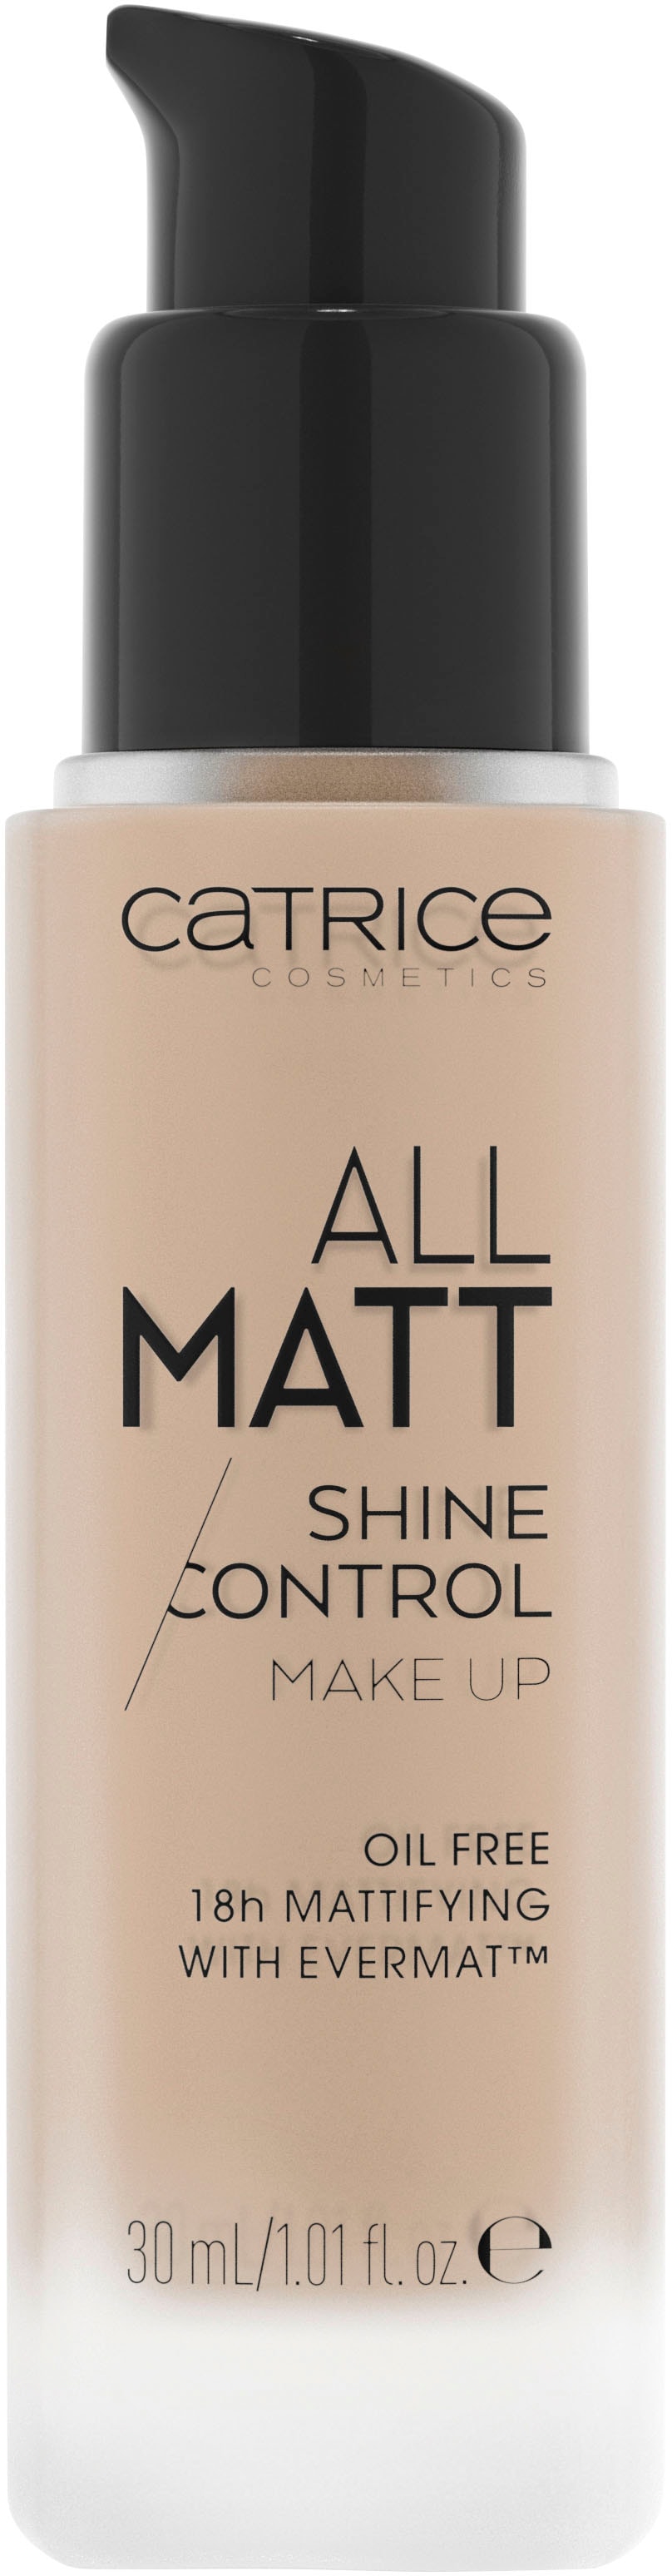 Make ♕ Shine »All Up« Matt Foundation Catrice Control bei